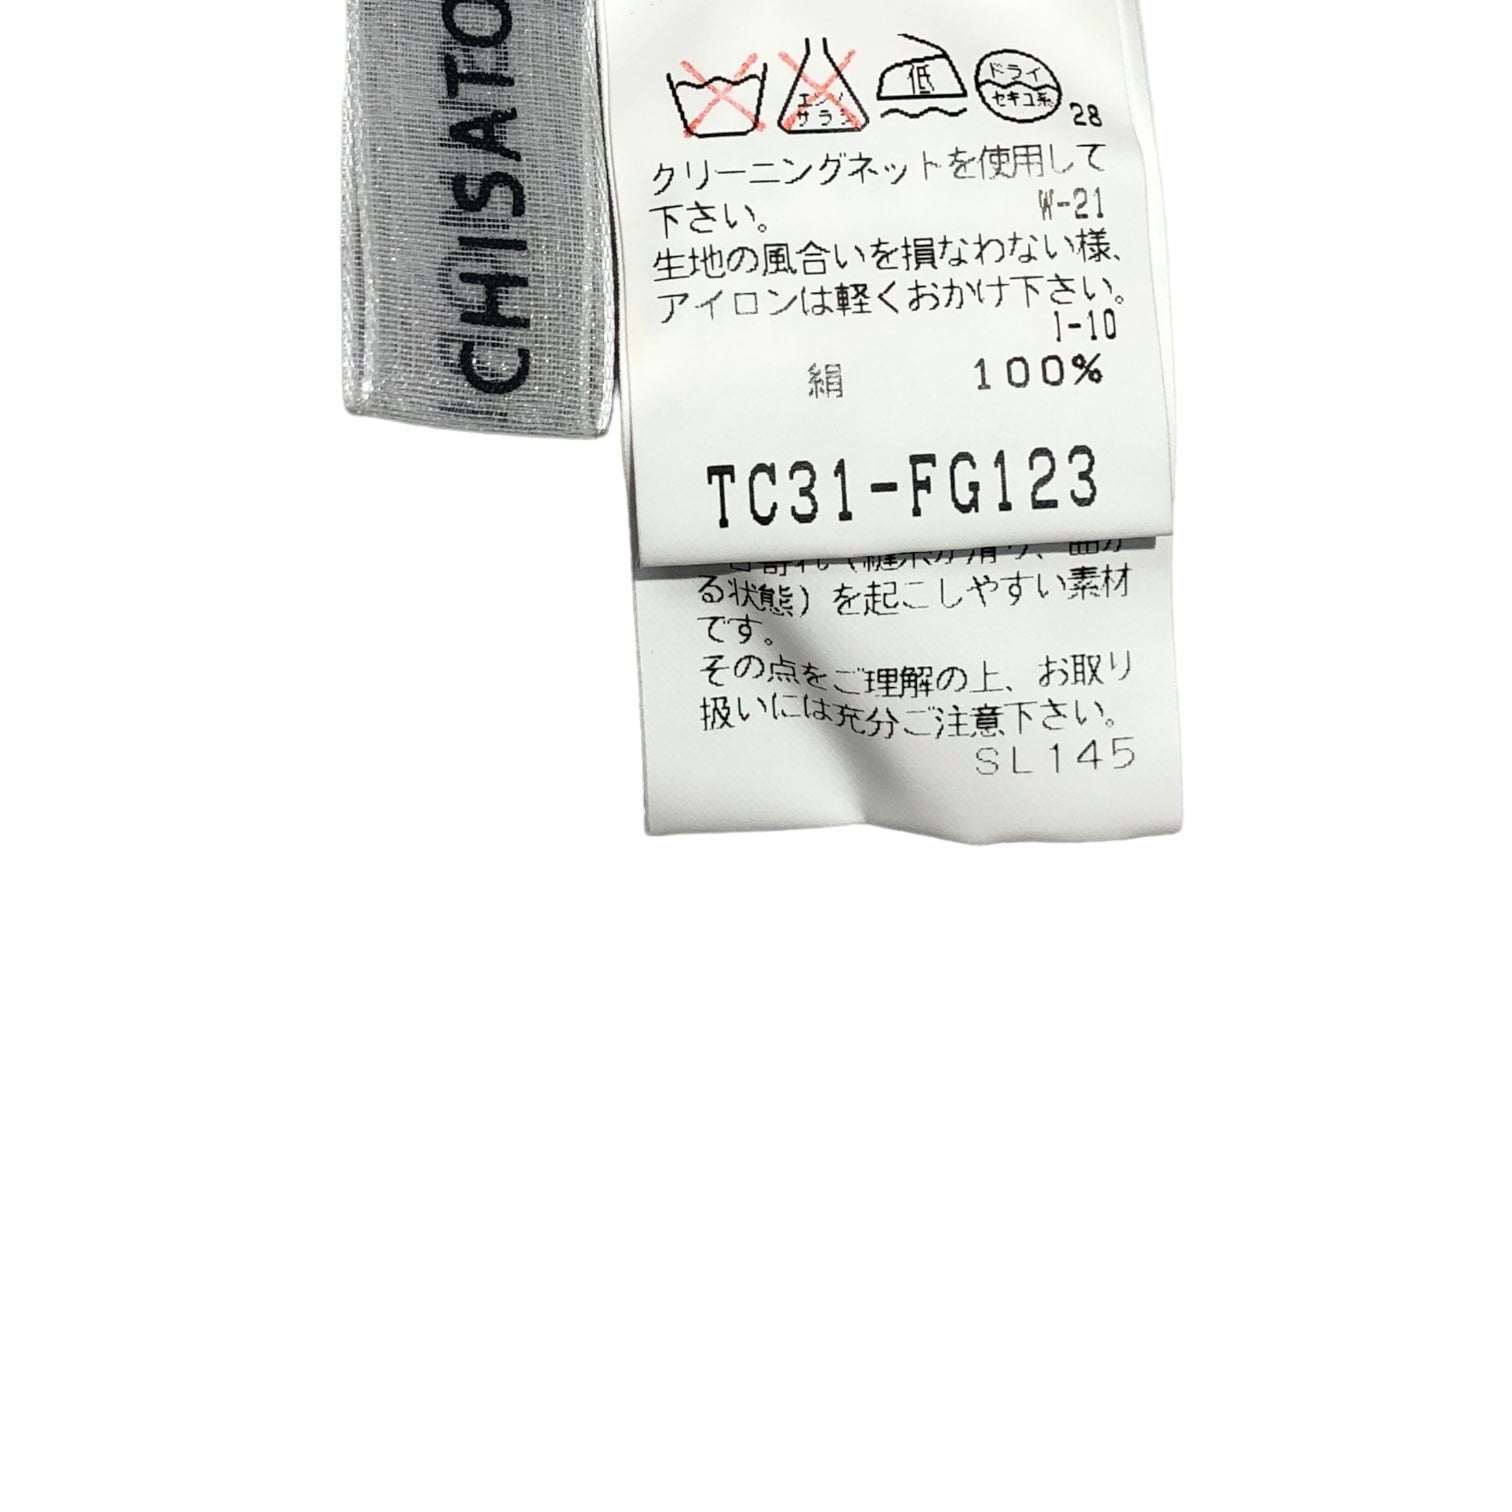 TSUMORI CHISATO(ツモリチサト) シフォンフラワープリントシルクプリーツスカート TC31-FG123 2(Mサイズ程度) パープル シルク100%